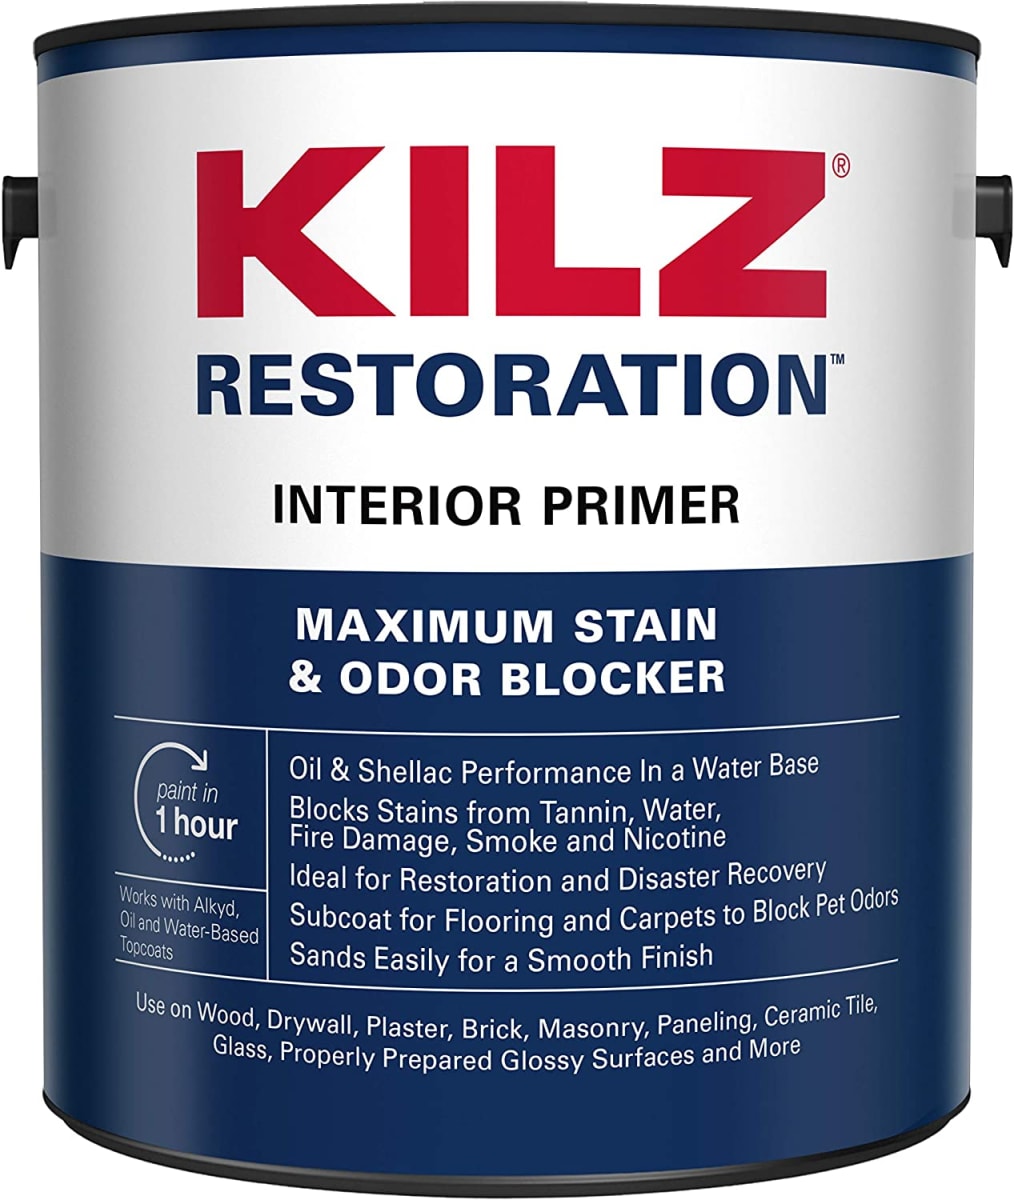 KILZ Restoration Primer